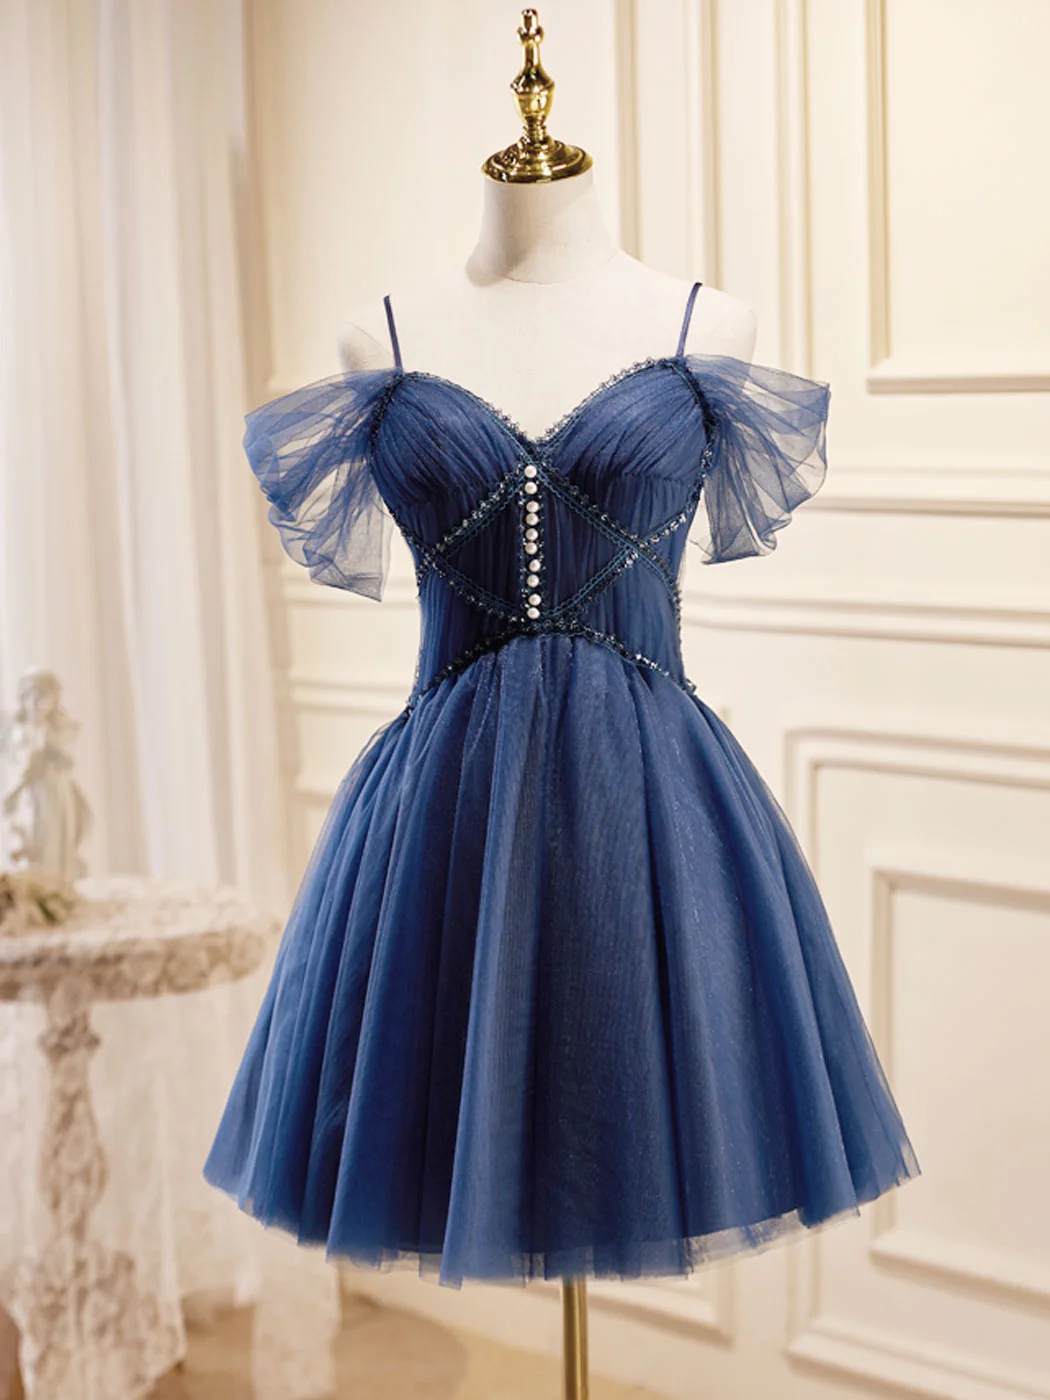 Cute Dark Blue V Neck Tulle Short Homecoming Dress